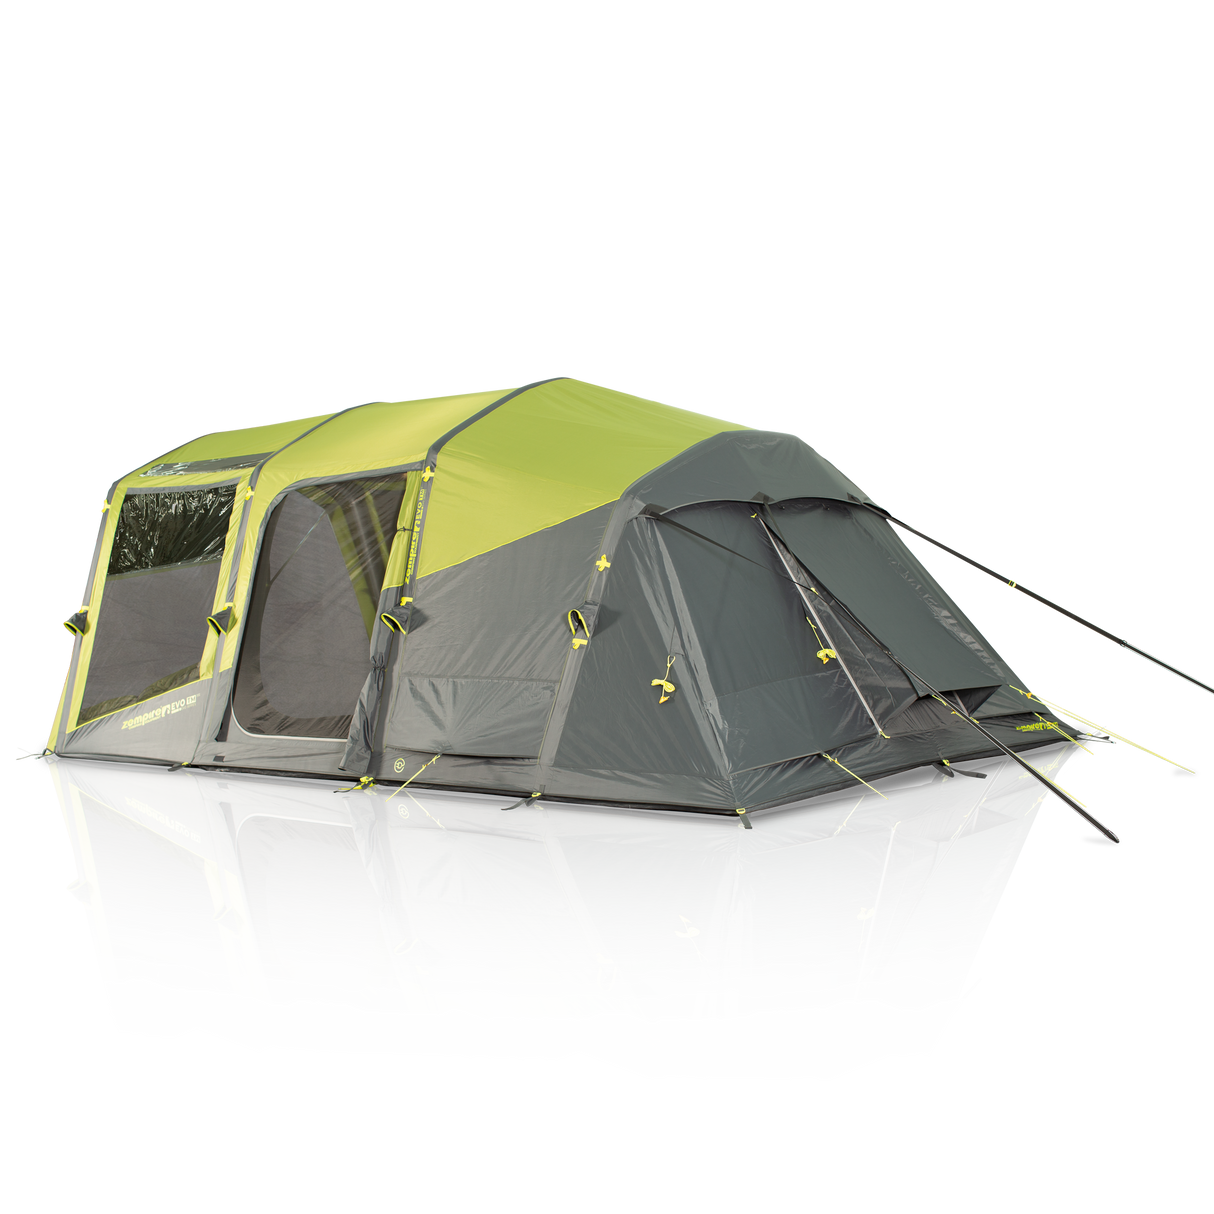 Zempire Evo TM V2 Air Tent